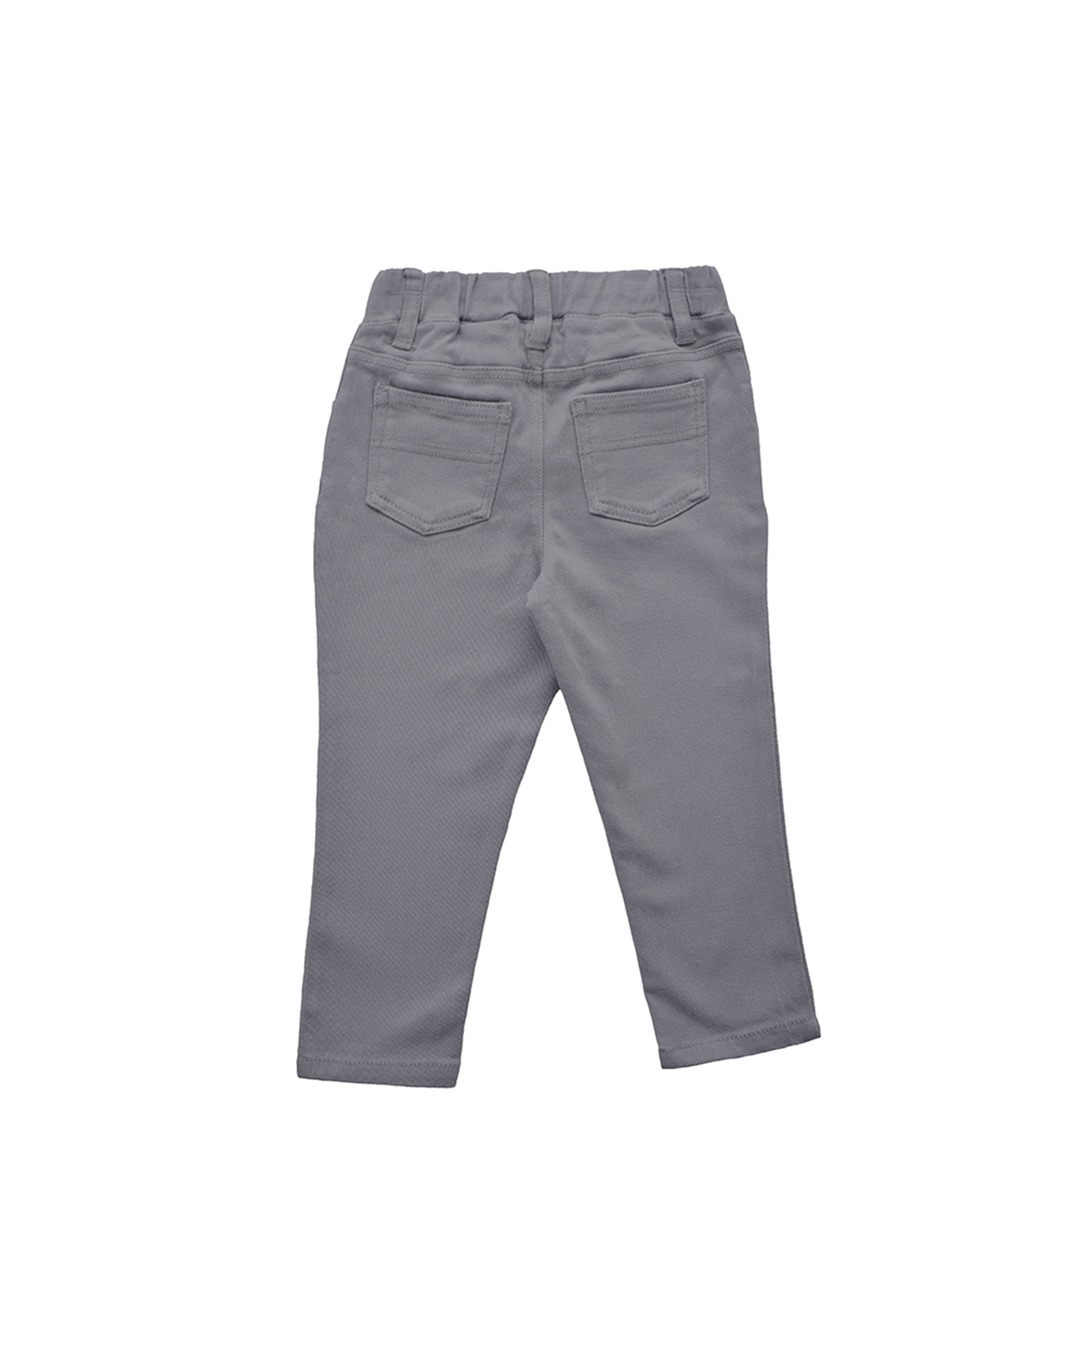 Pantalón gris con elástico en cintura